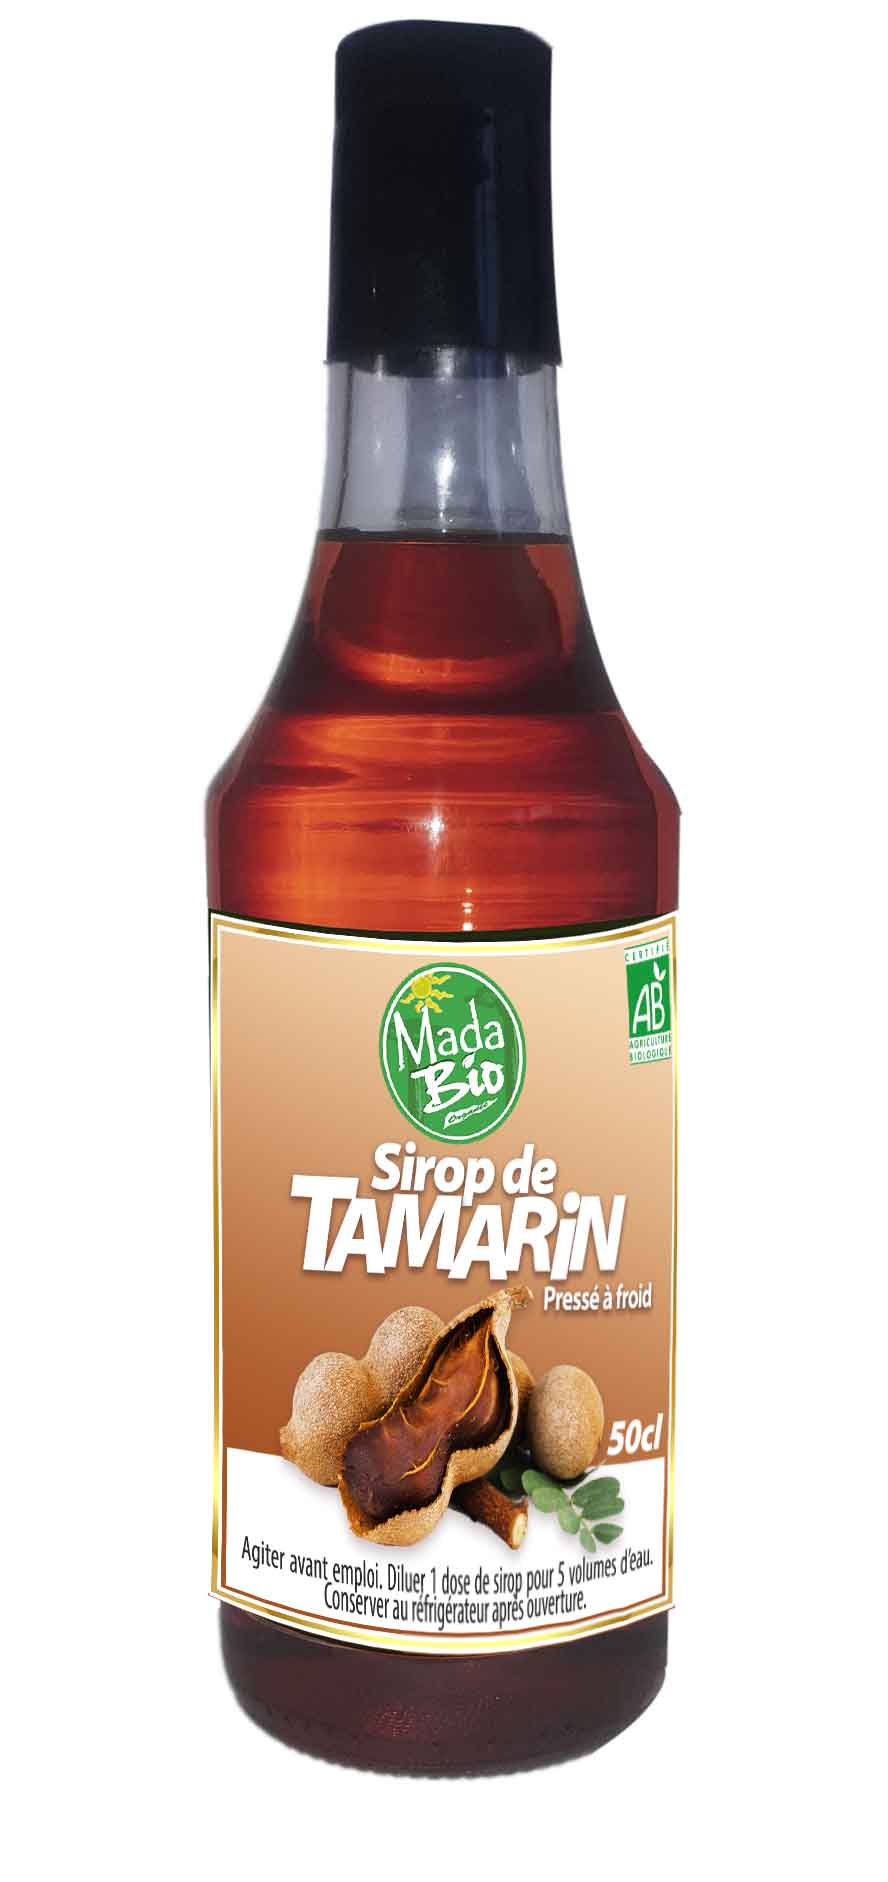 Tamarind syrup